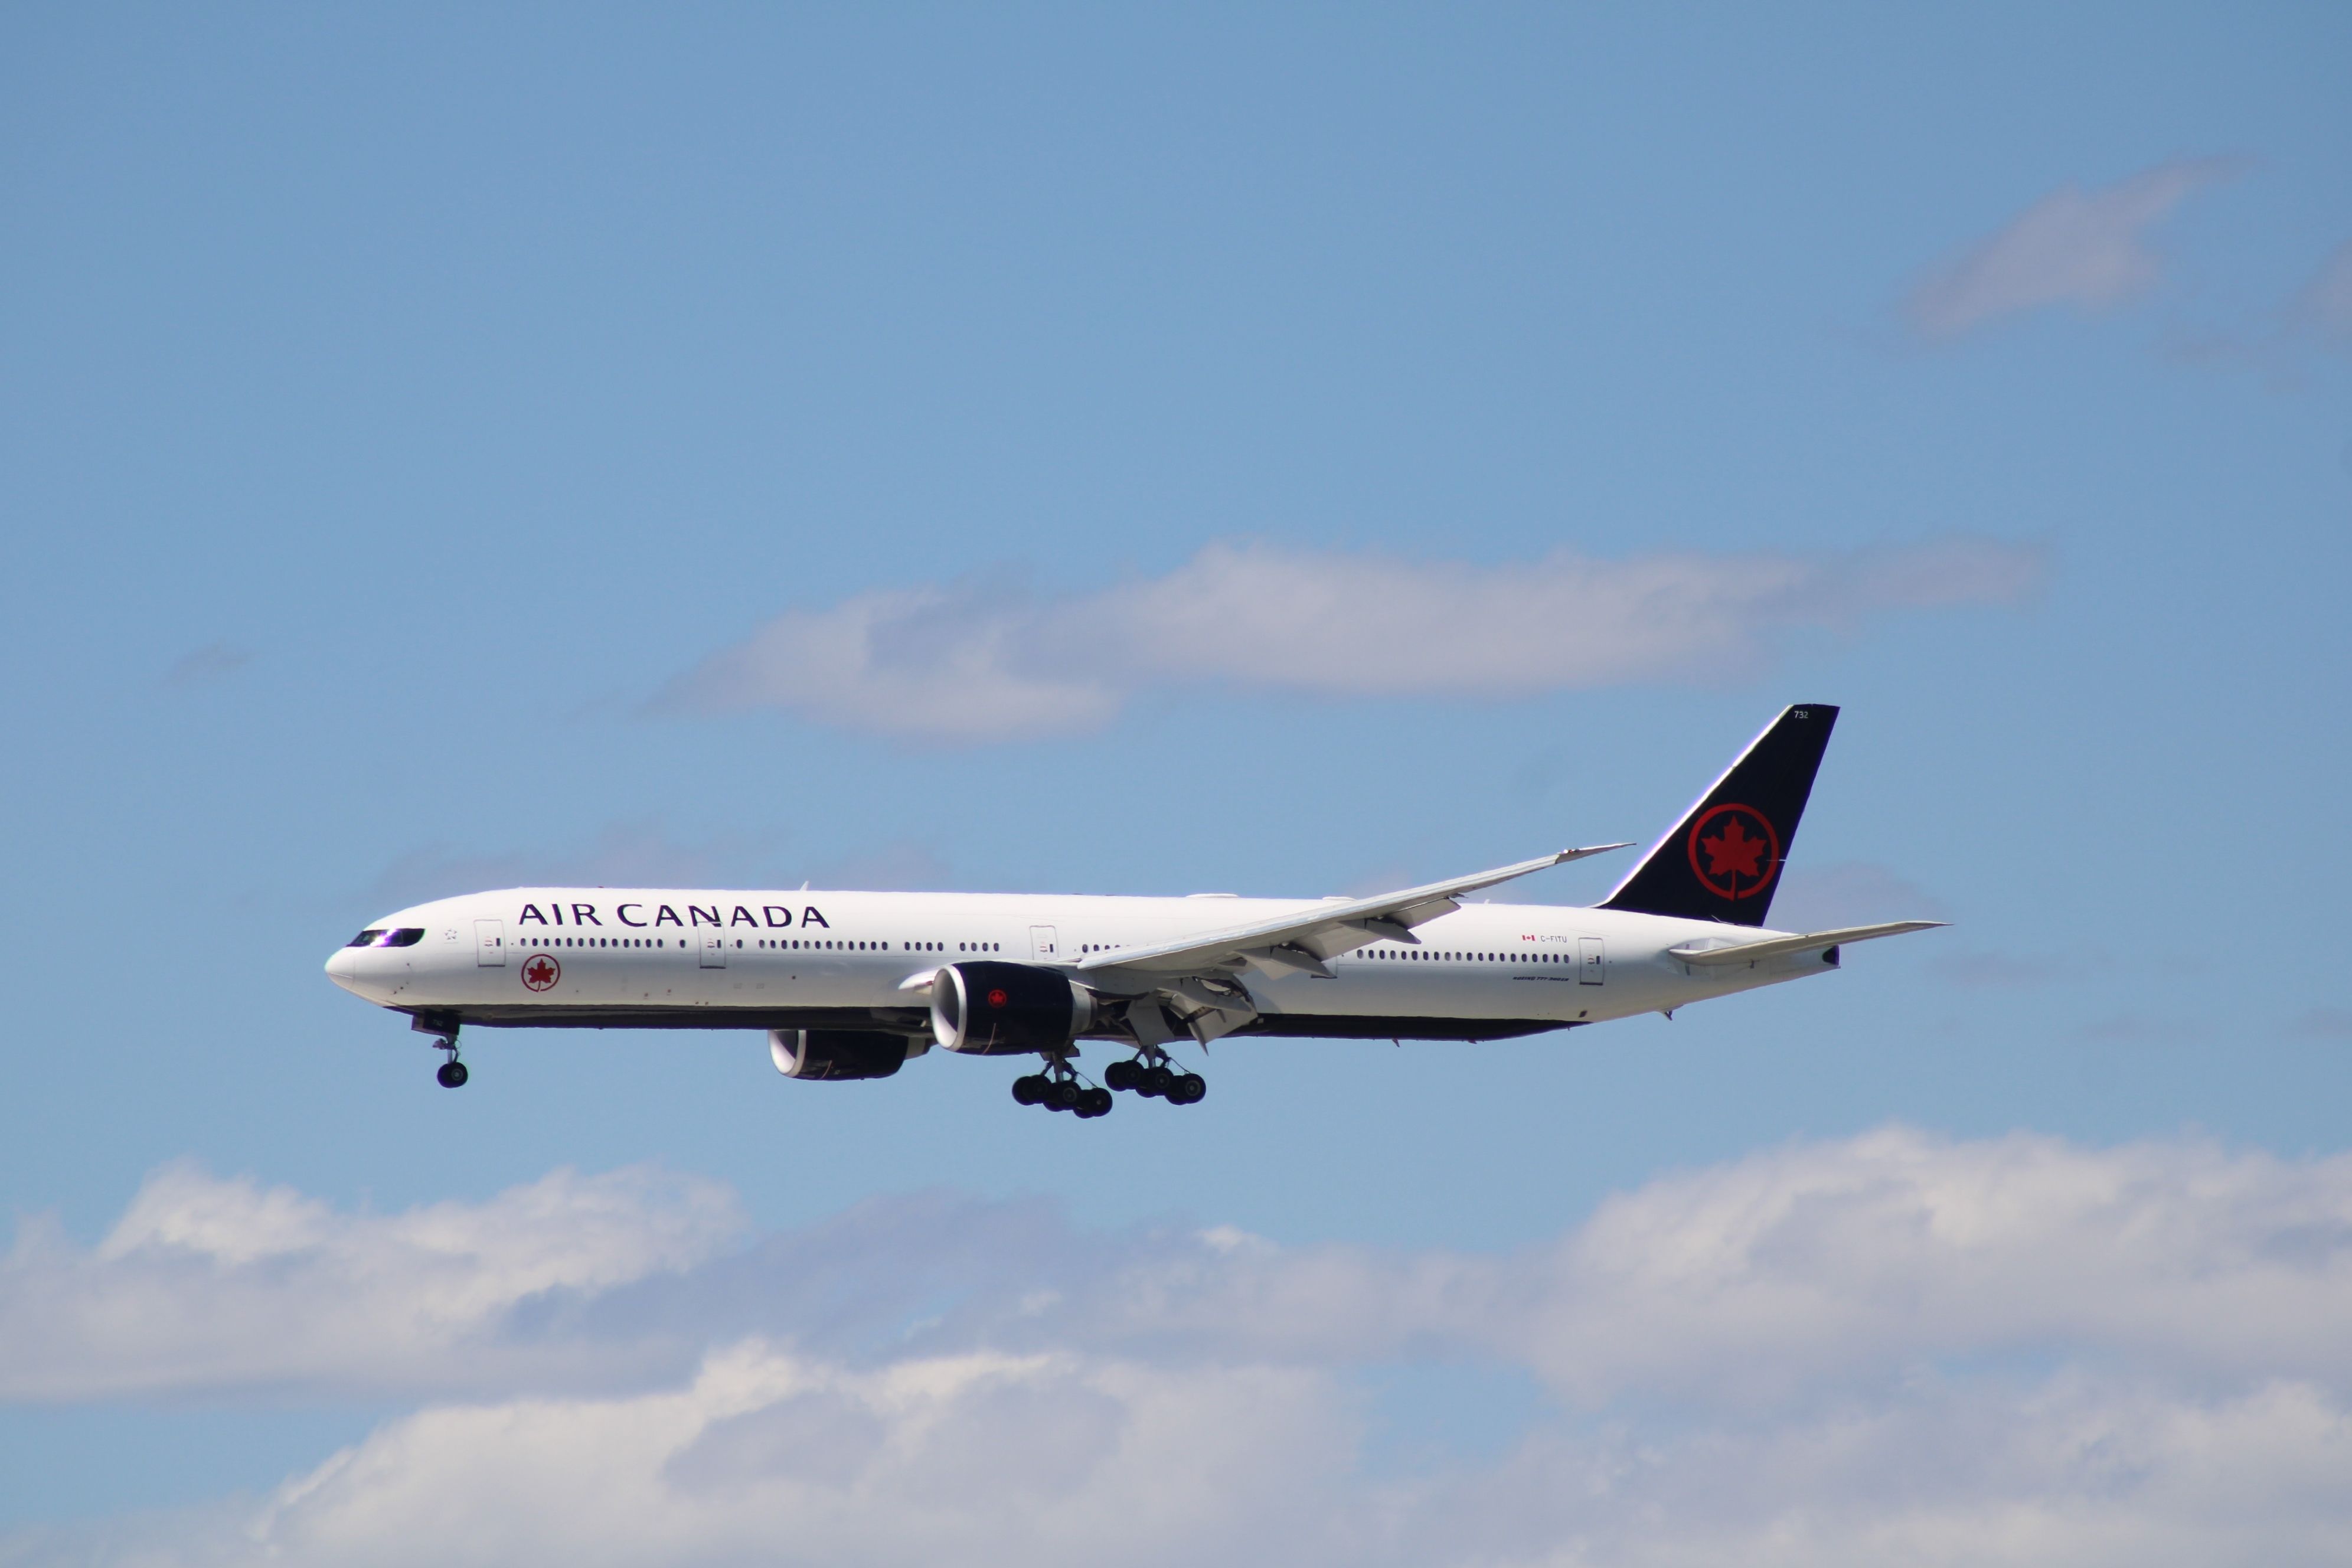 Air Canada Boeing 777-300ER landing at Toronto Pearson International Airport YYZ